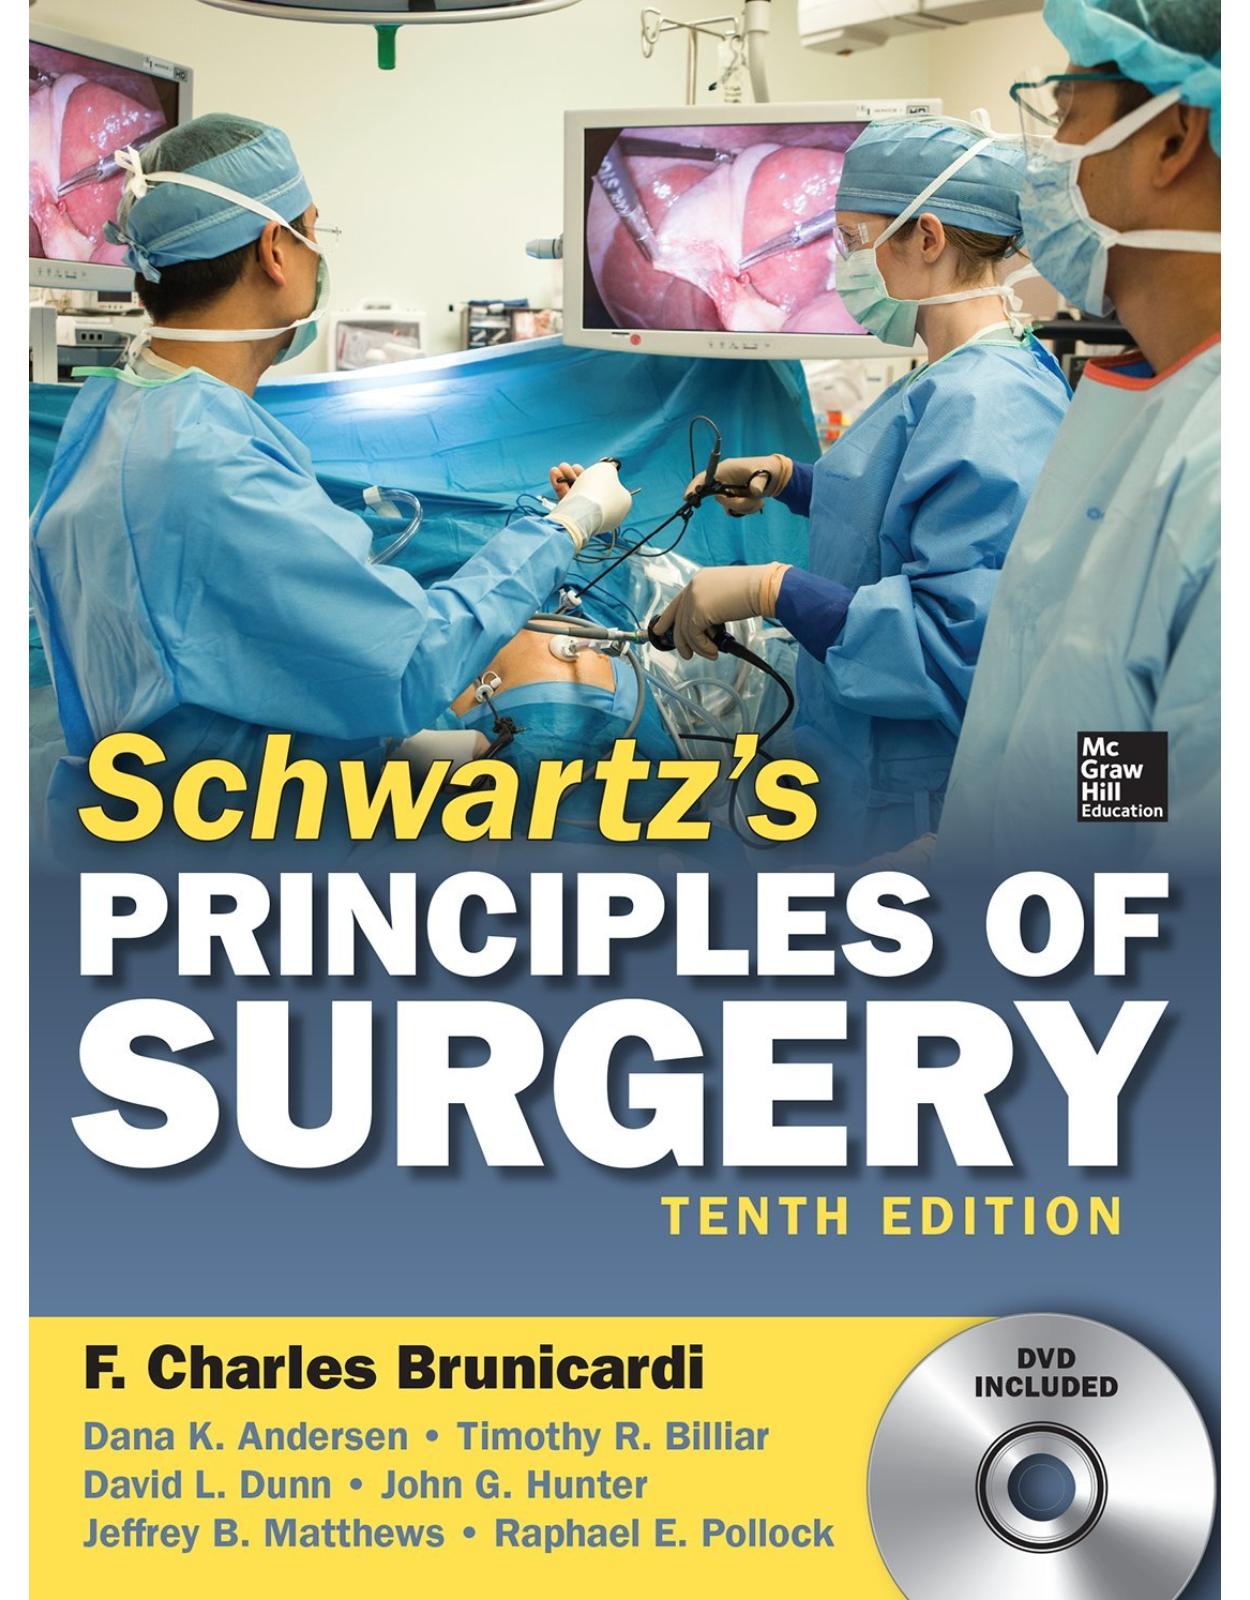 Schwartz's Principles of Surgery, 10th edition